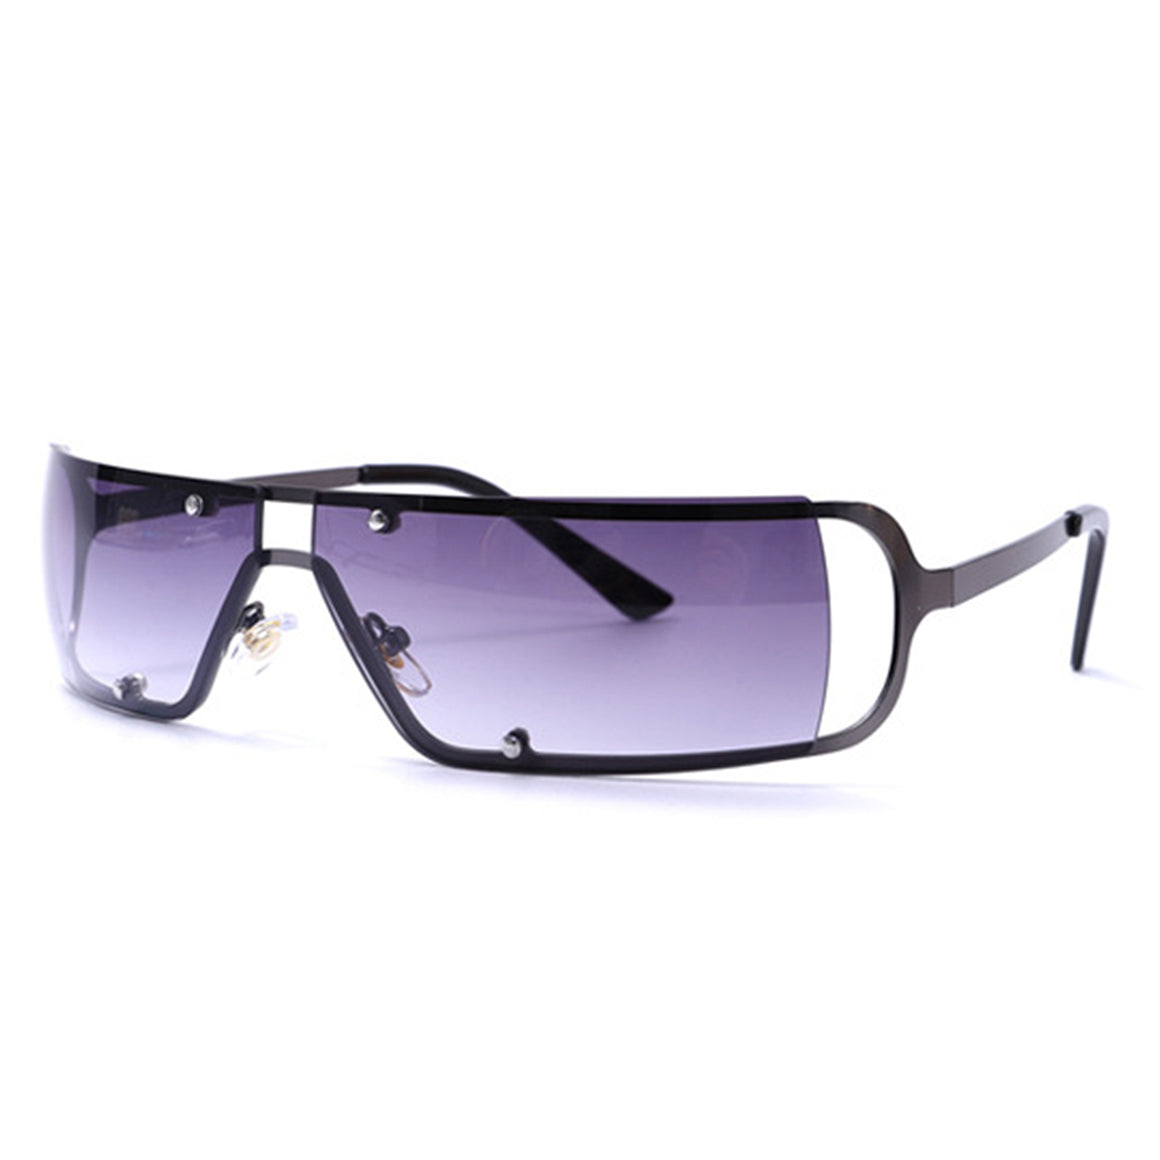 Ustia - Rectangle Narrow Tinted Wraparound Fashion Sunglasses